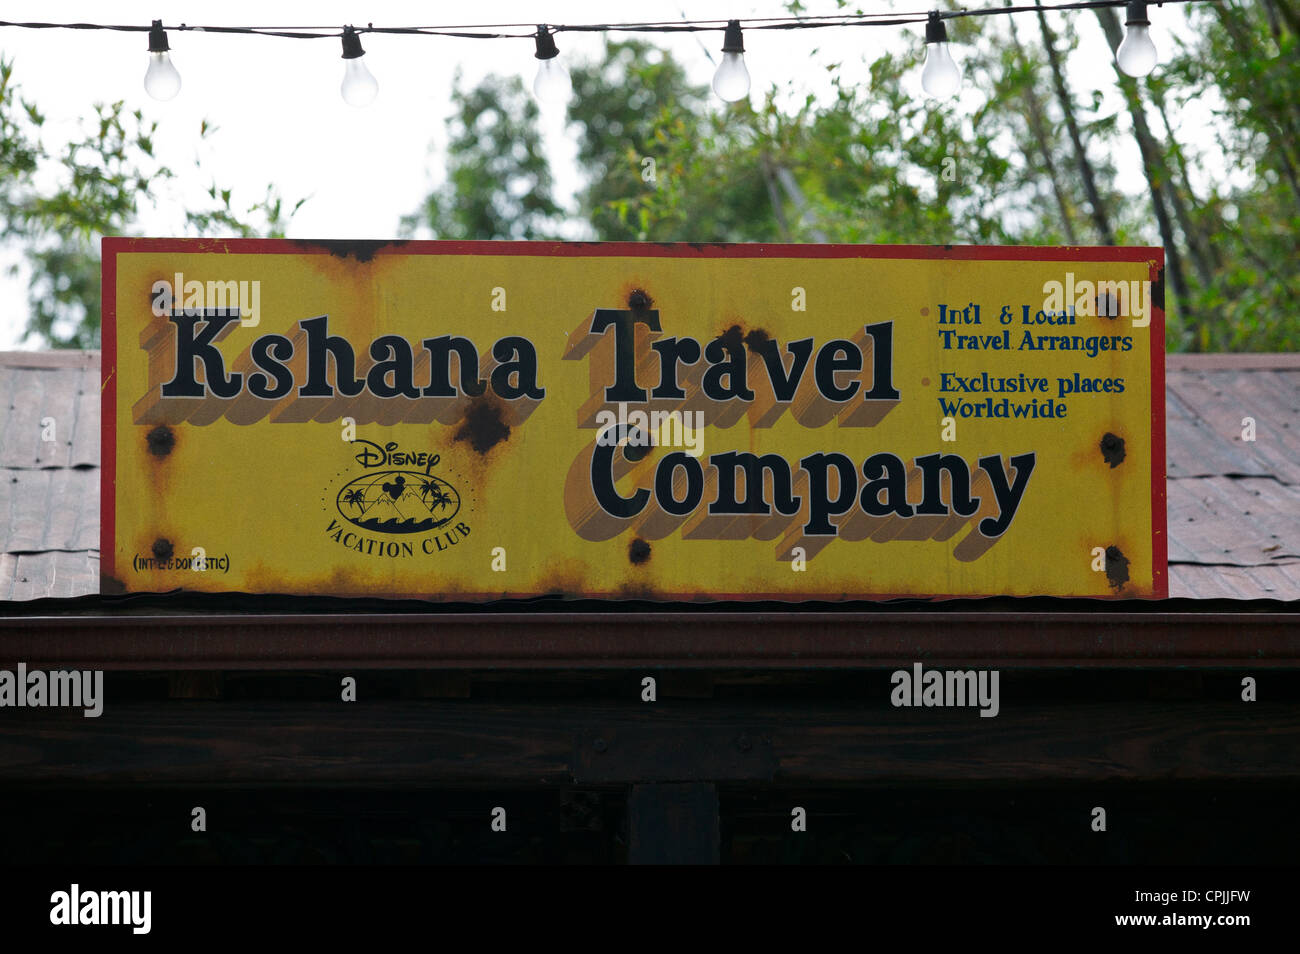 Kshana Travel Company Zeichen in Disneys Animal Kingdom Resort, Orlando, Florida, USA. Dies gehört zu den Disney Vacation Club. Stockfoto